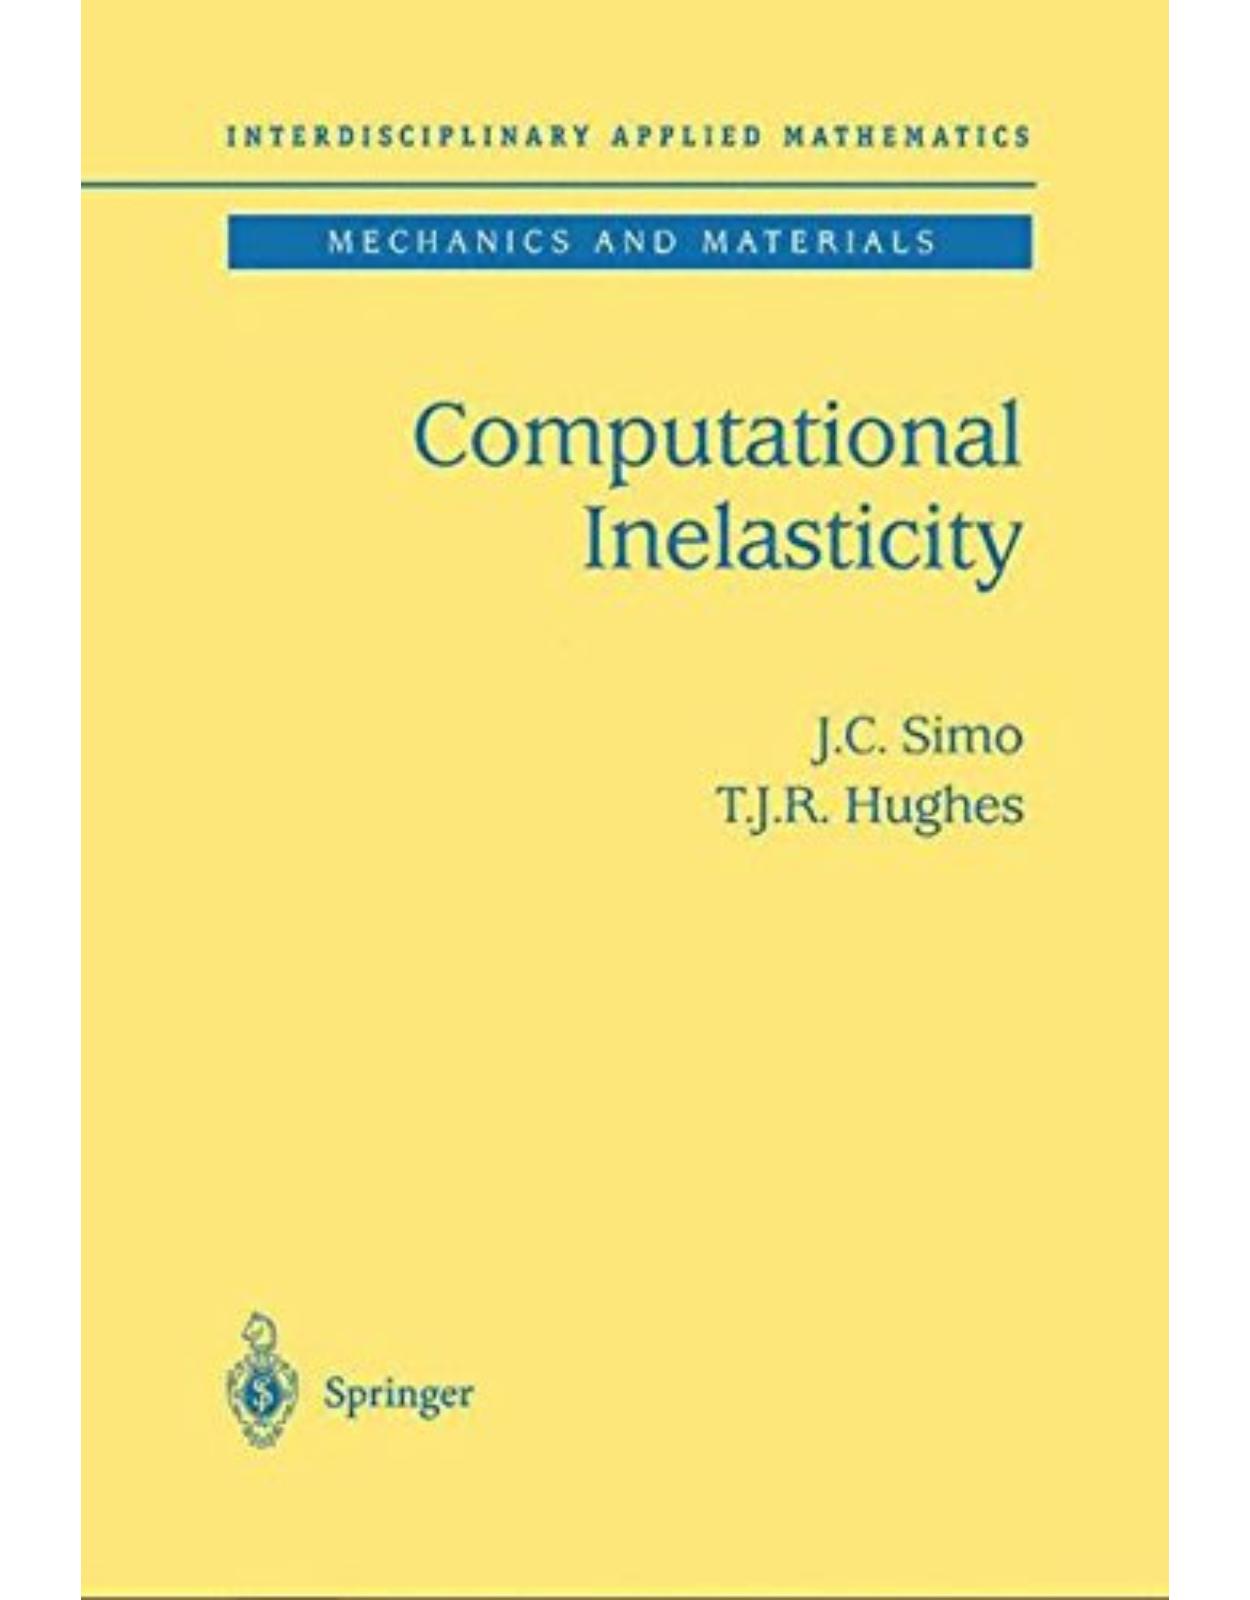 Computational Inelasticity: v. 7 (Interdisciplinary Applied Mathematics) 